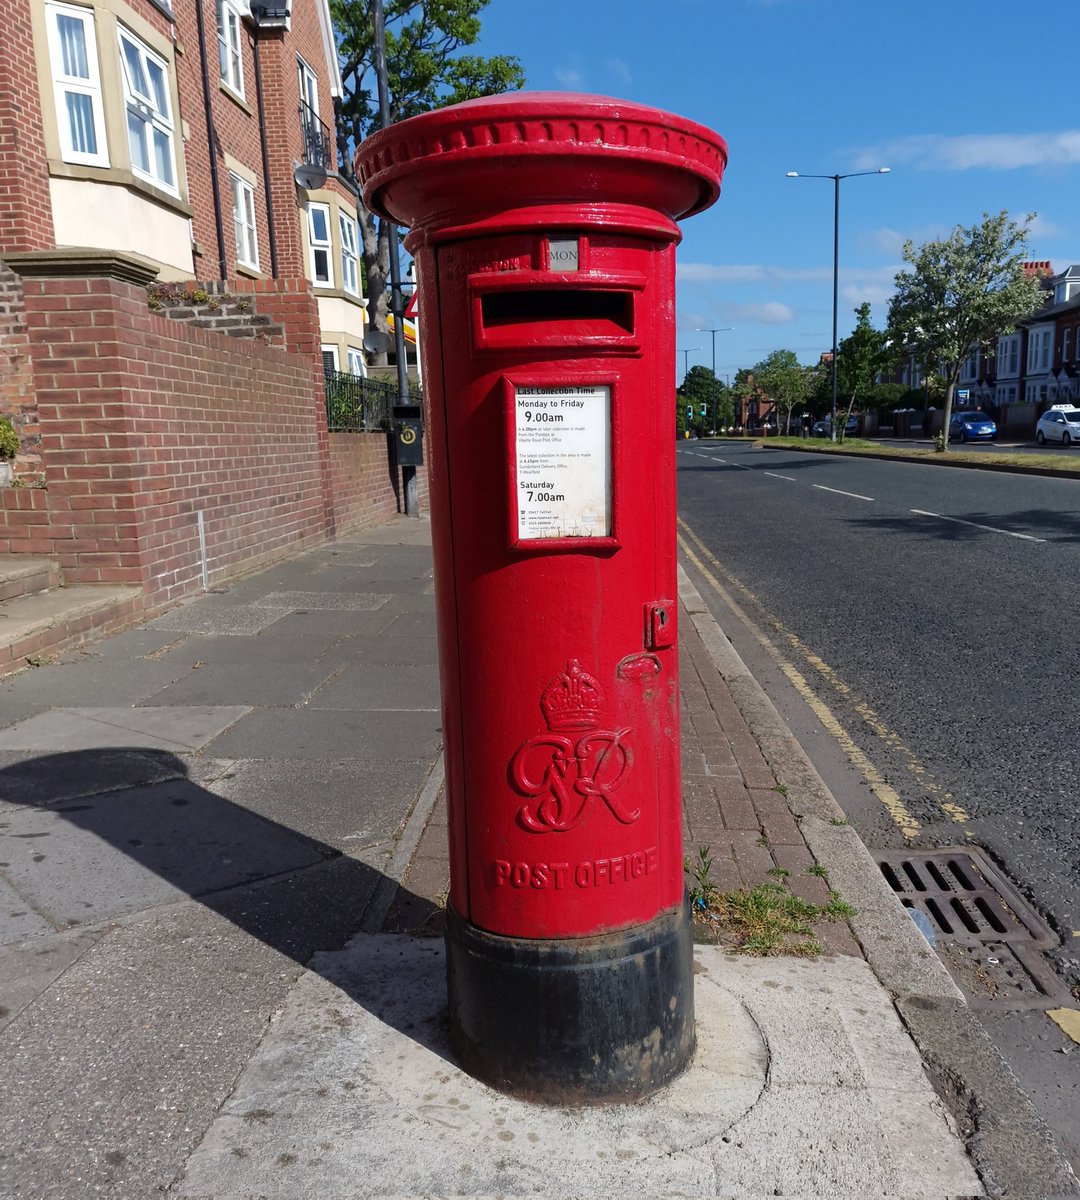 Another George Rex post box found on Ryhope Road, Sunderland. 

#GeorgeRex #LittleRedBoxes #PostBox #RoyalMail